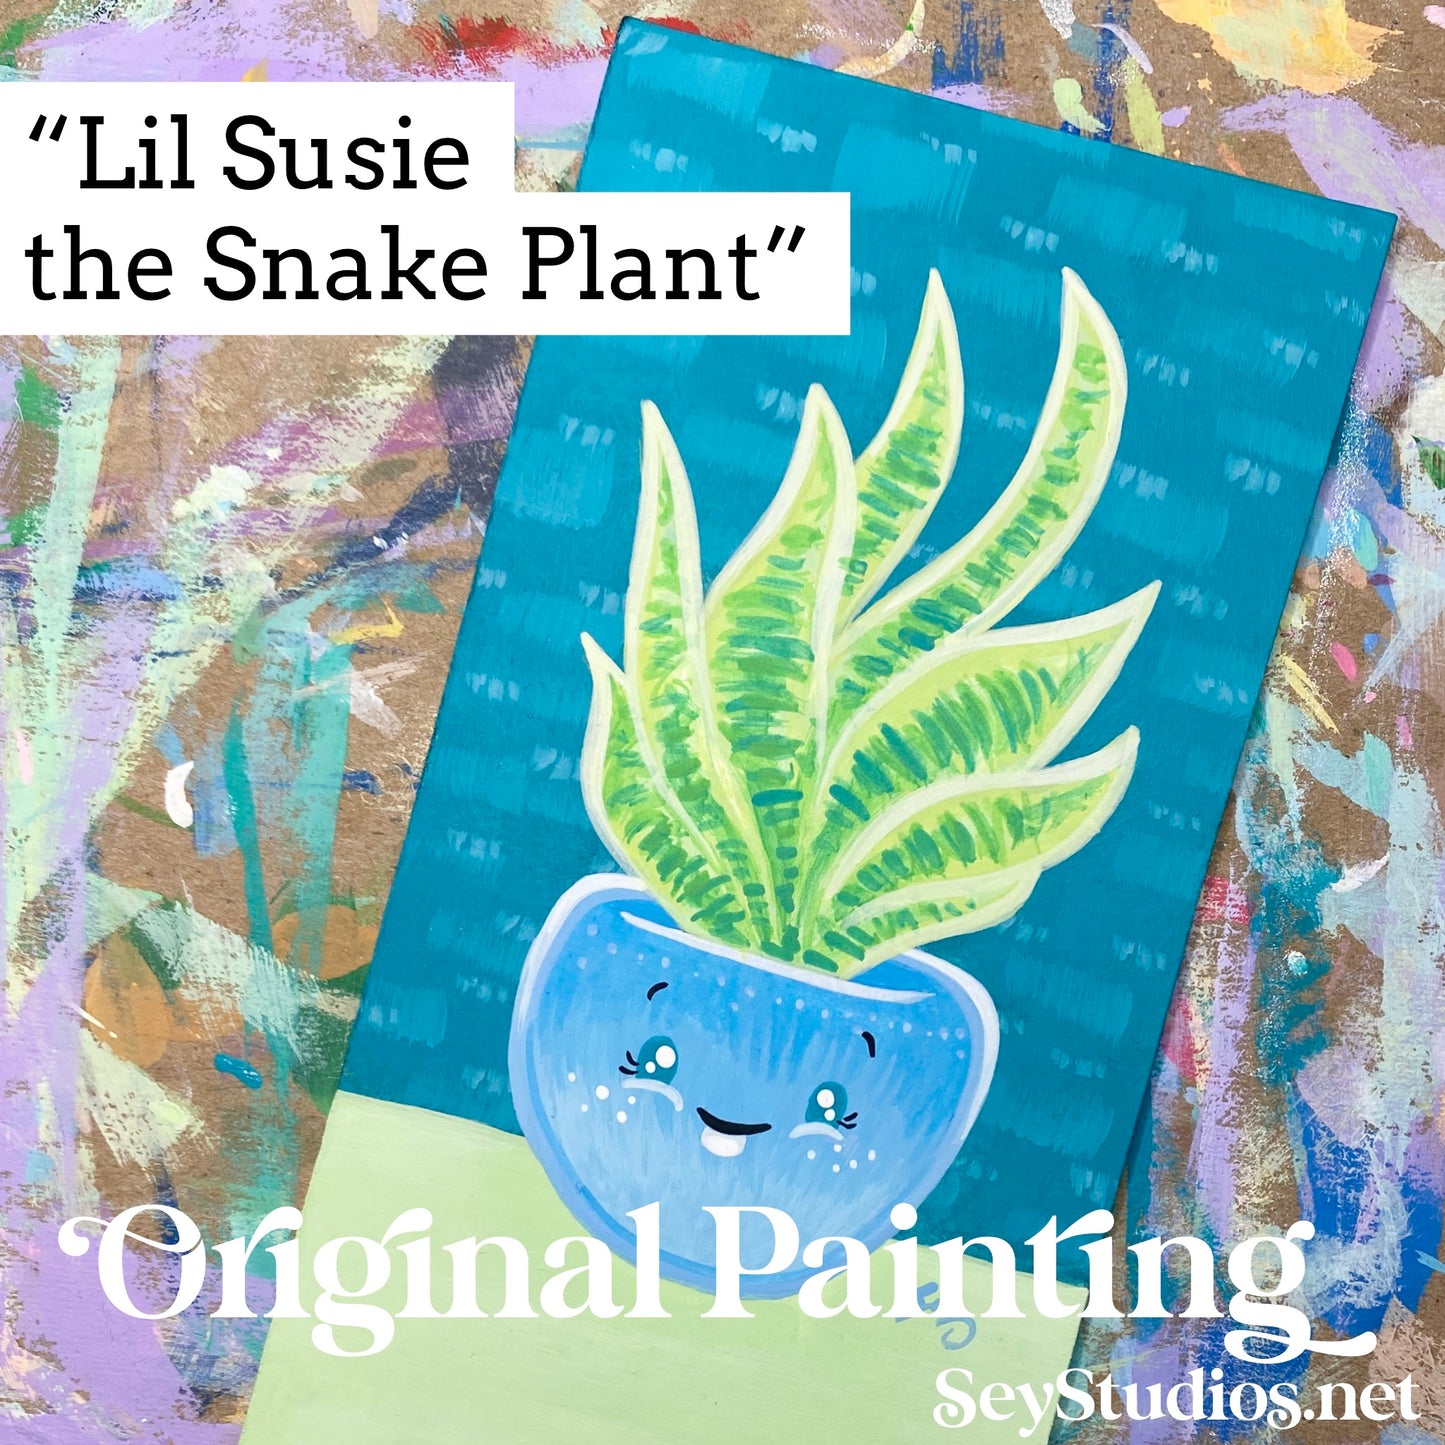 Original - “Lil Susie the Snake Plant” painting